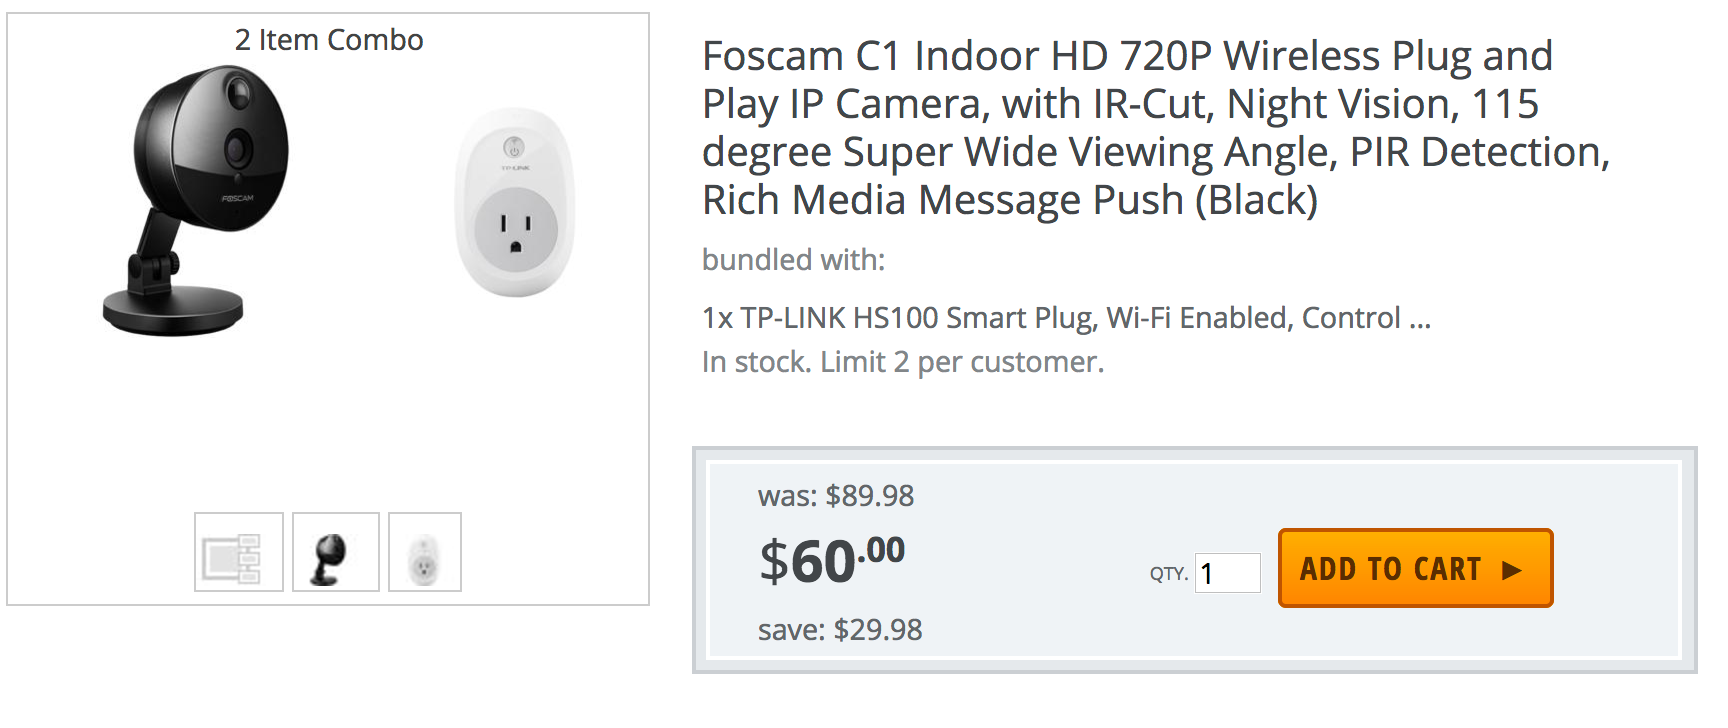 foscam-c1-indoor-hd-720p-wireless-plug-and-play-ip-camera